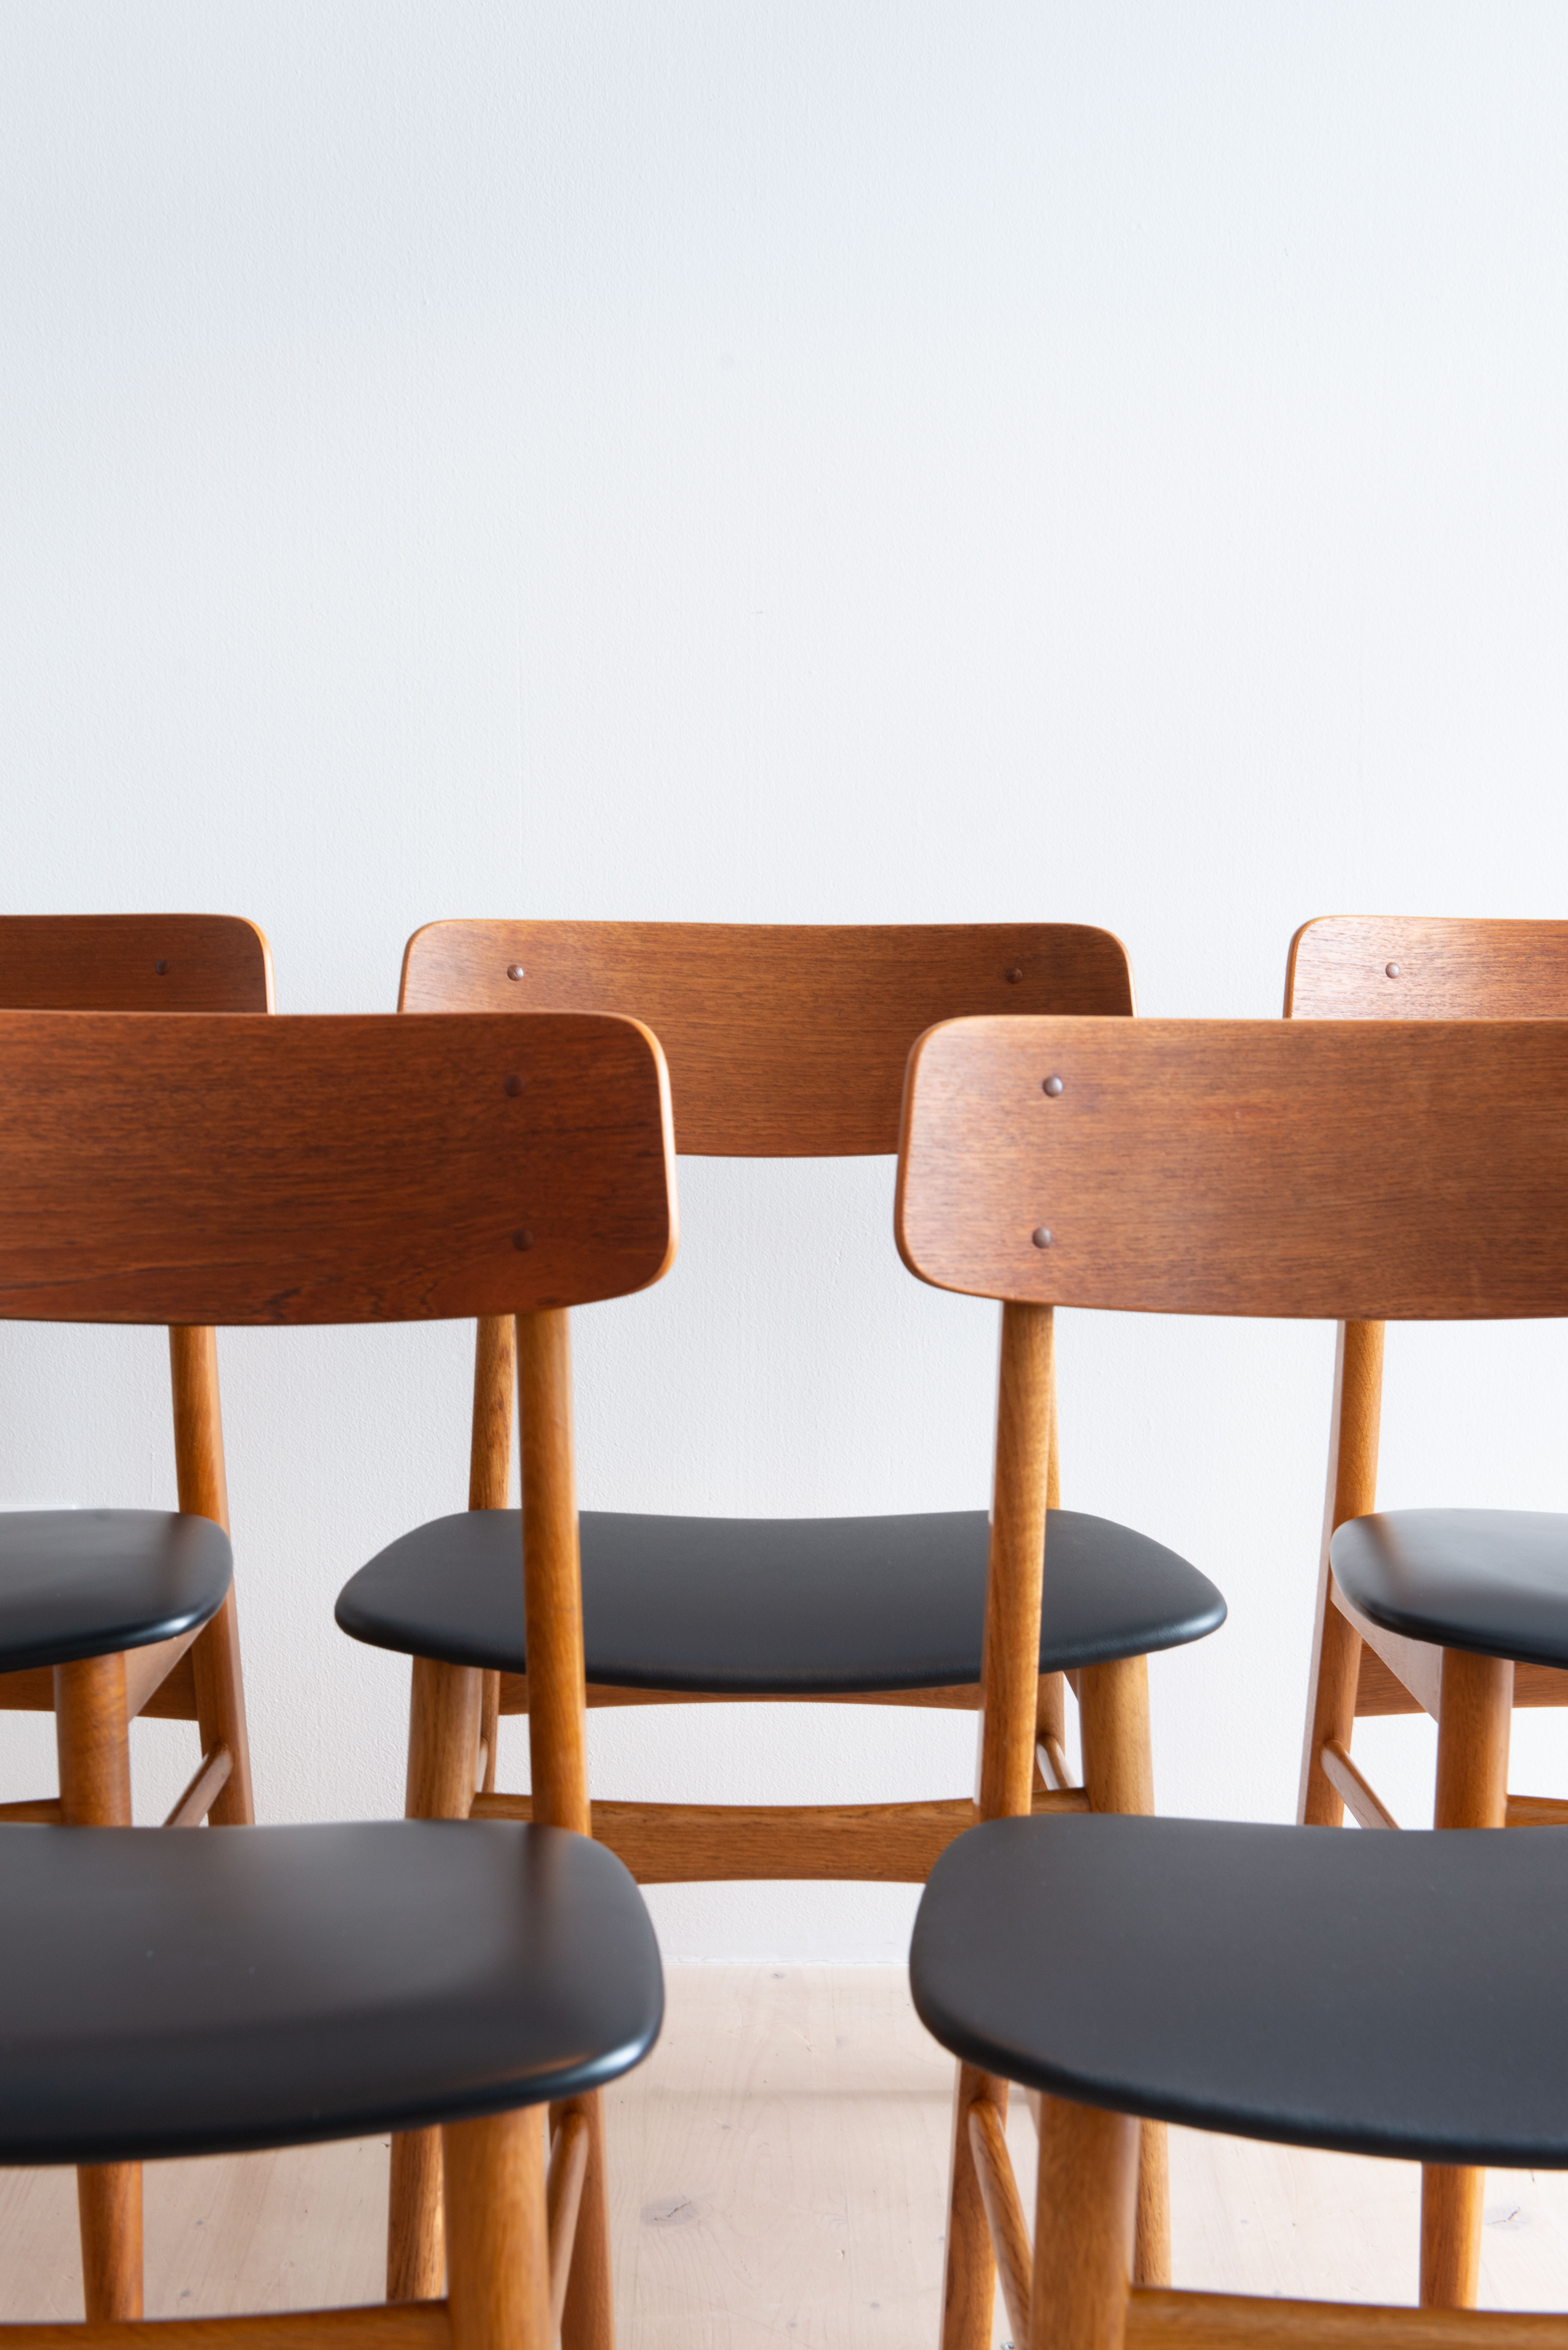 Farstrup Teak and Oak Dining Chairs. Made in Denmark. Mid-Century Modern furniture and other stuff. Available at heyday möbel, Grubenstrasse 19, 8045 Zürich. Danish-Modern; vintage; retro.